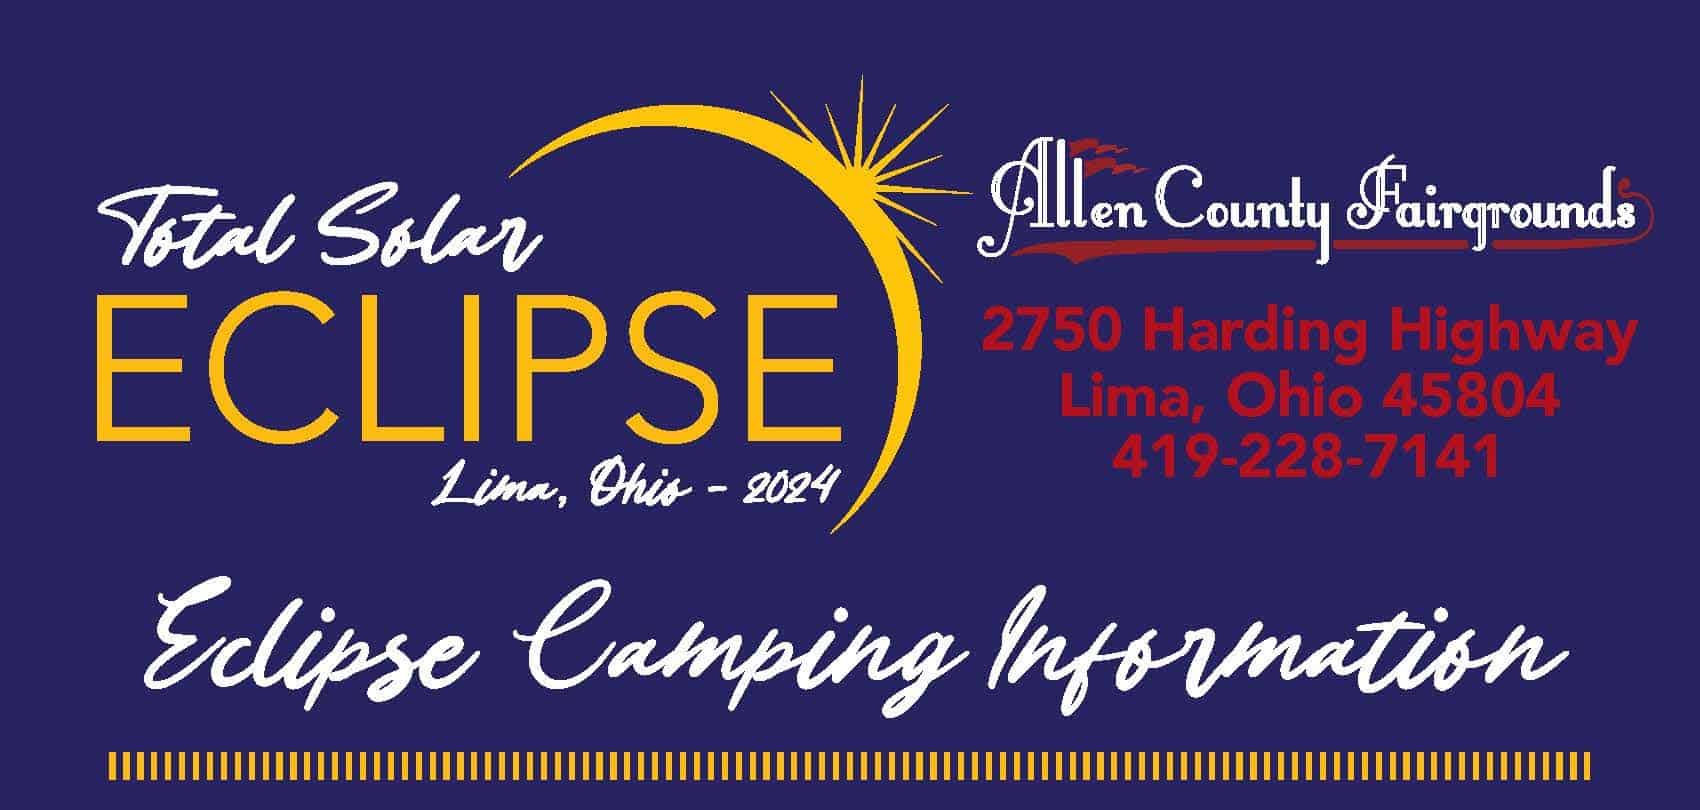 2024 Eclipse Camping Allen County Fairgrounds